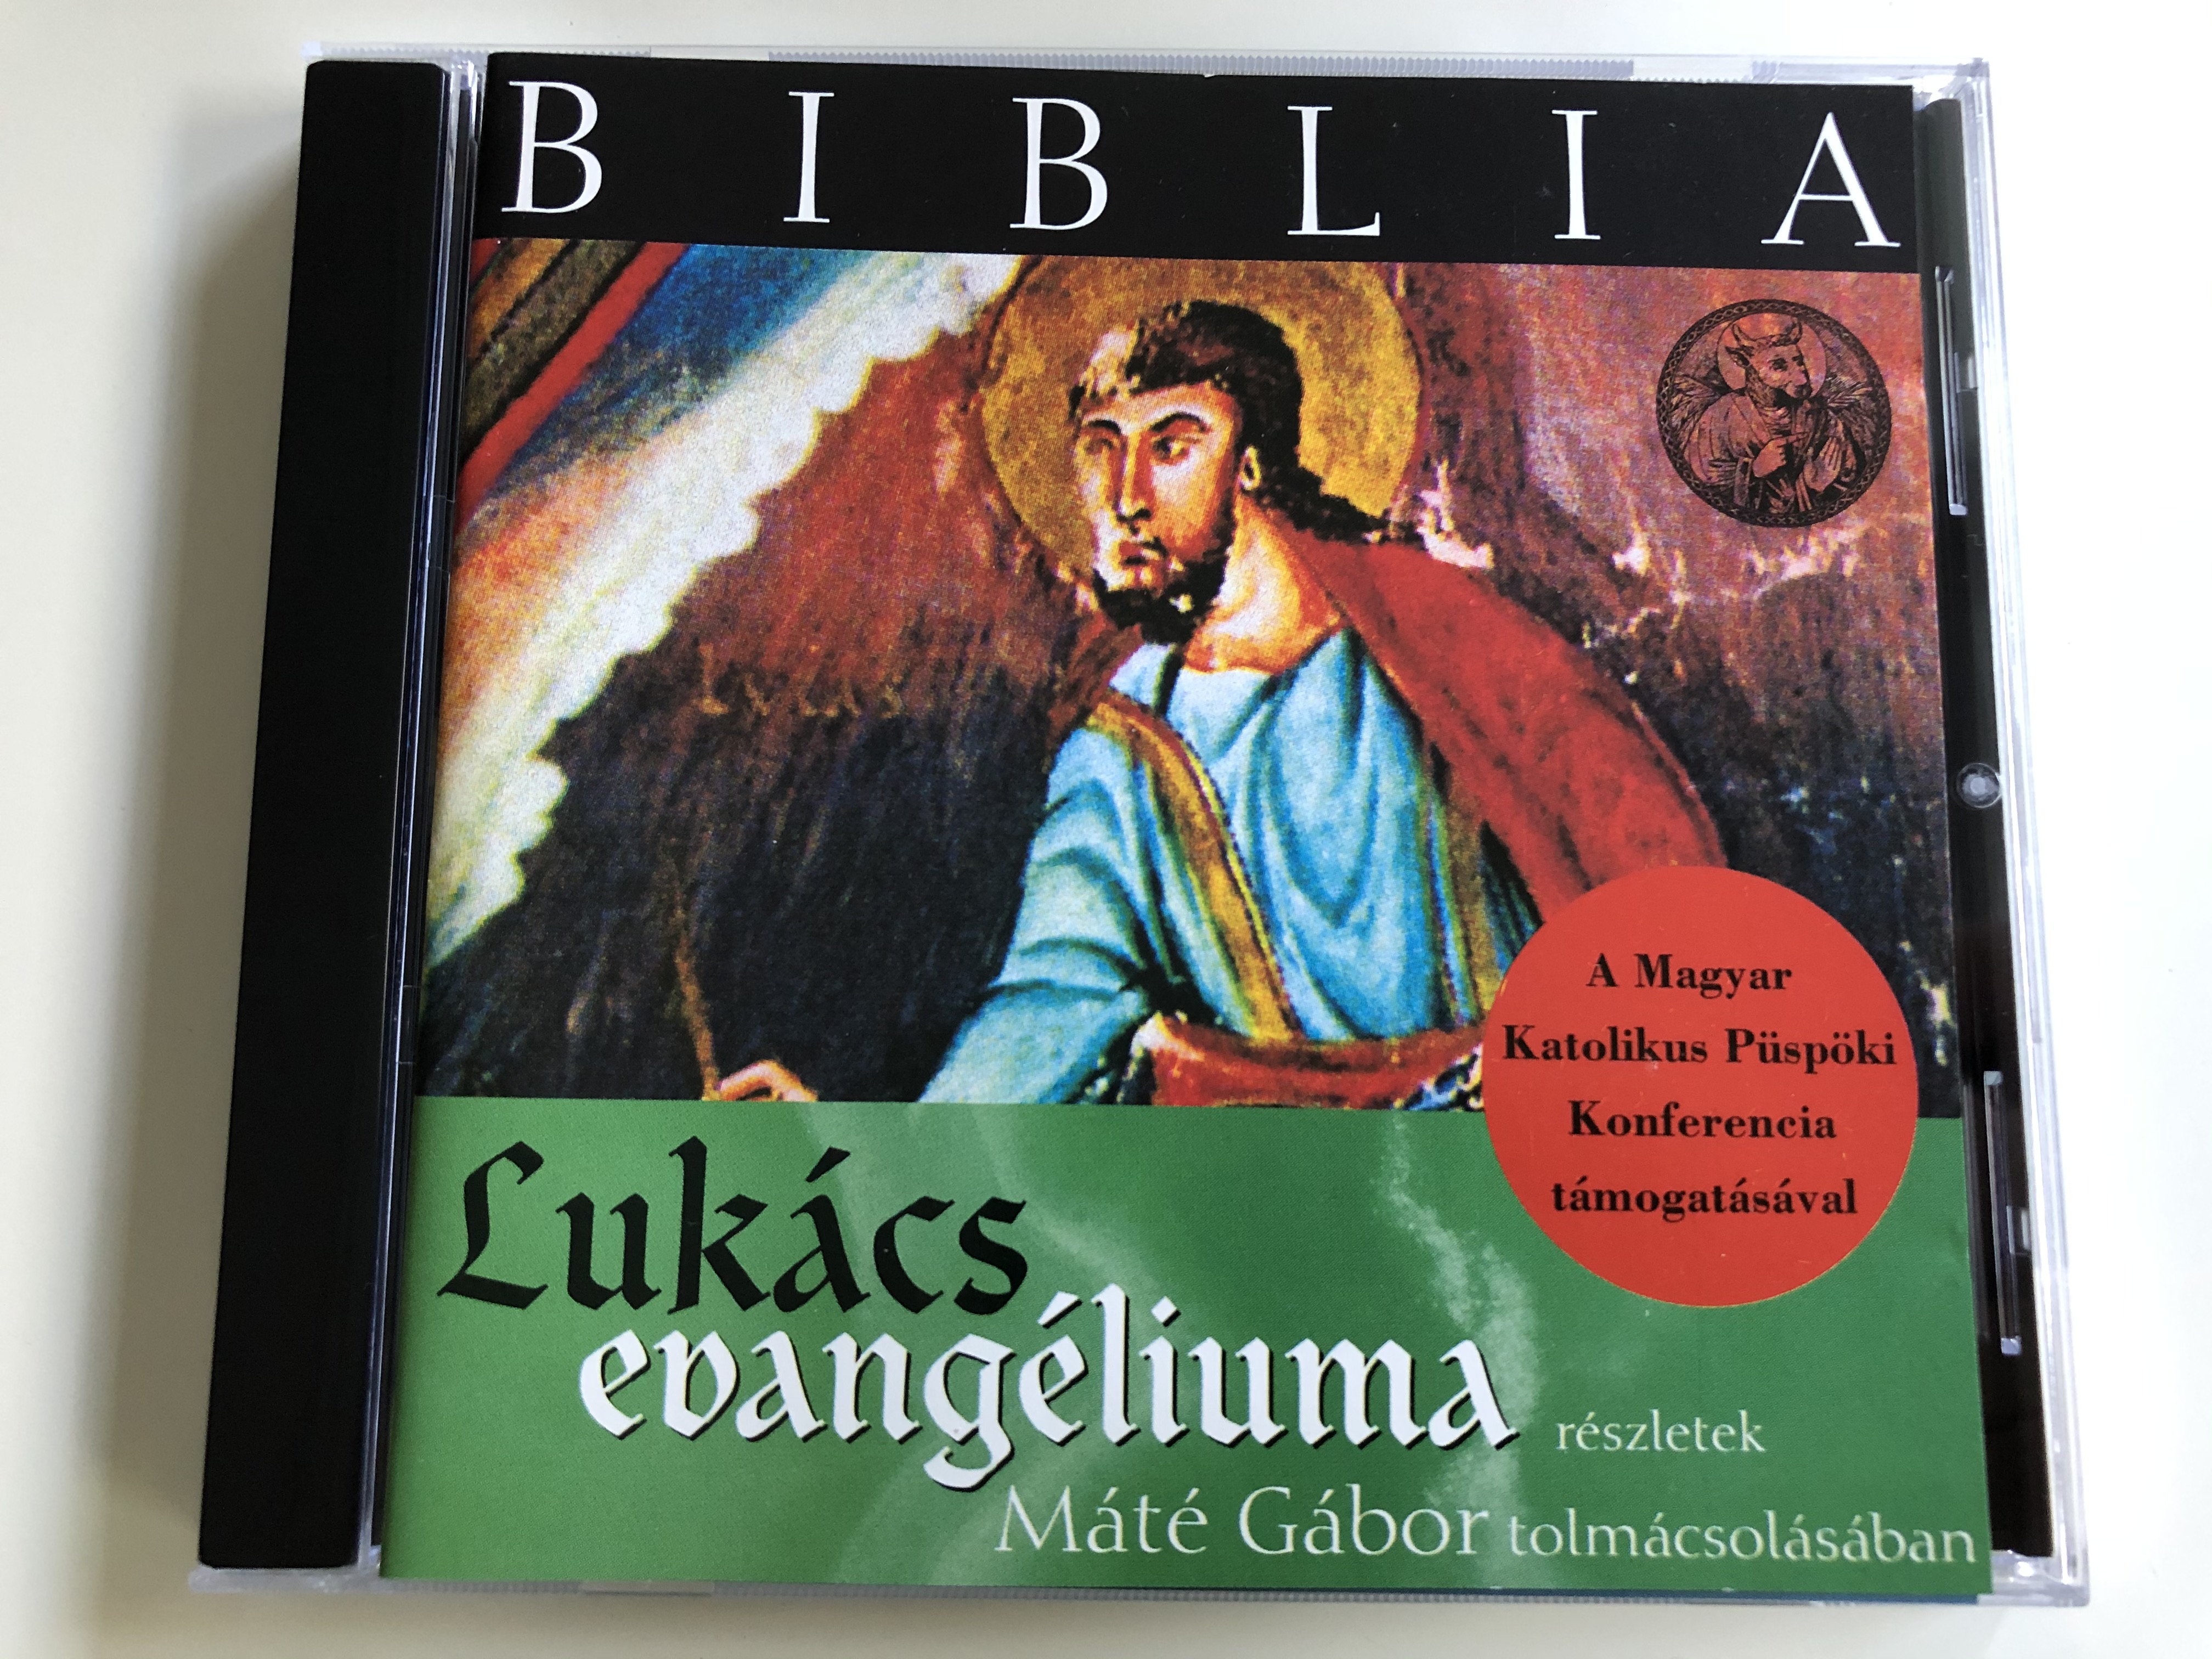 biblia-lukacs-evangeliuma-reszletek-mate-gabor-tolmacsolasaban-bmg-audio-cd-2001-74321-891282-1-.jpg